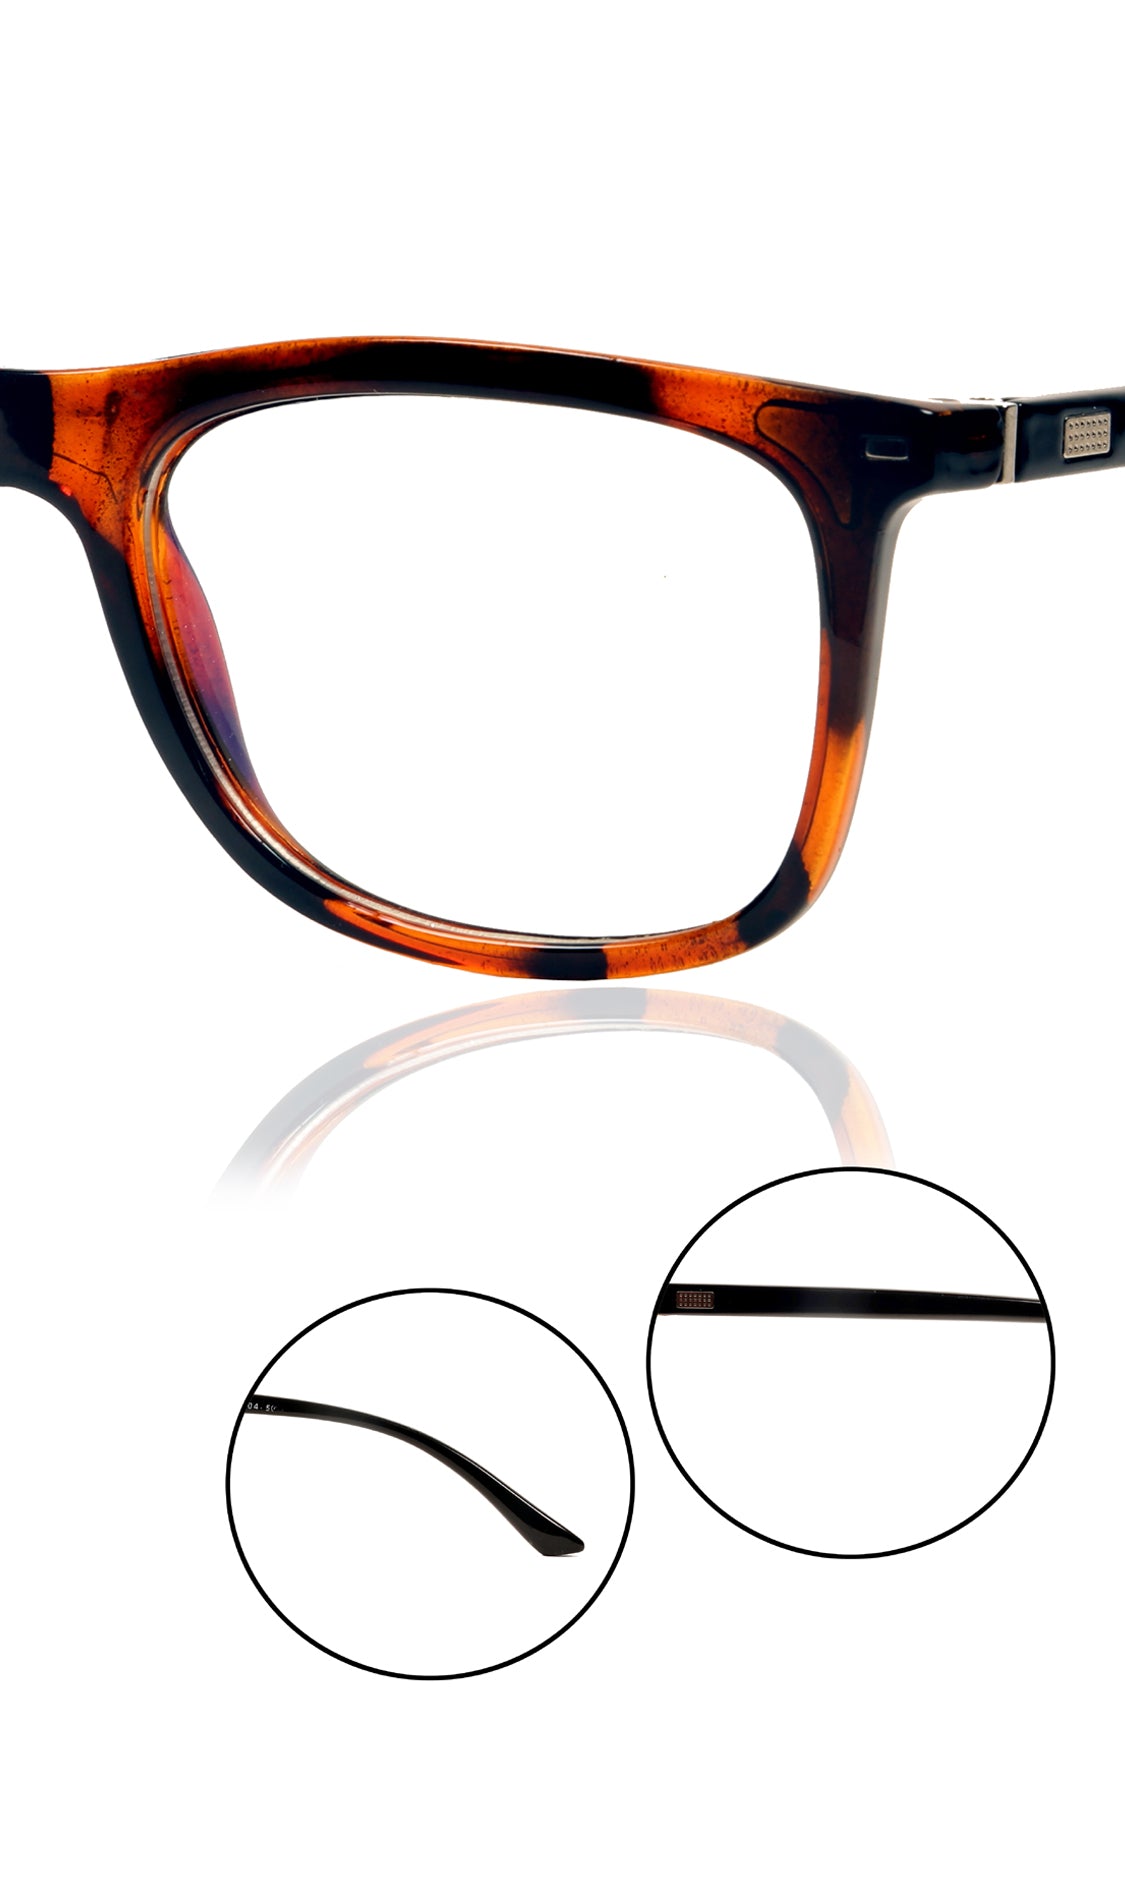 Jodykoes® Colour Frame Series Eyewears | Blue Rays Protection Warfare Stylish Spectacles With Anti Glare Eyeglasses For Men and Women Eyewears (Leopard Print) - Jodykoes ®